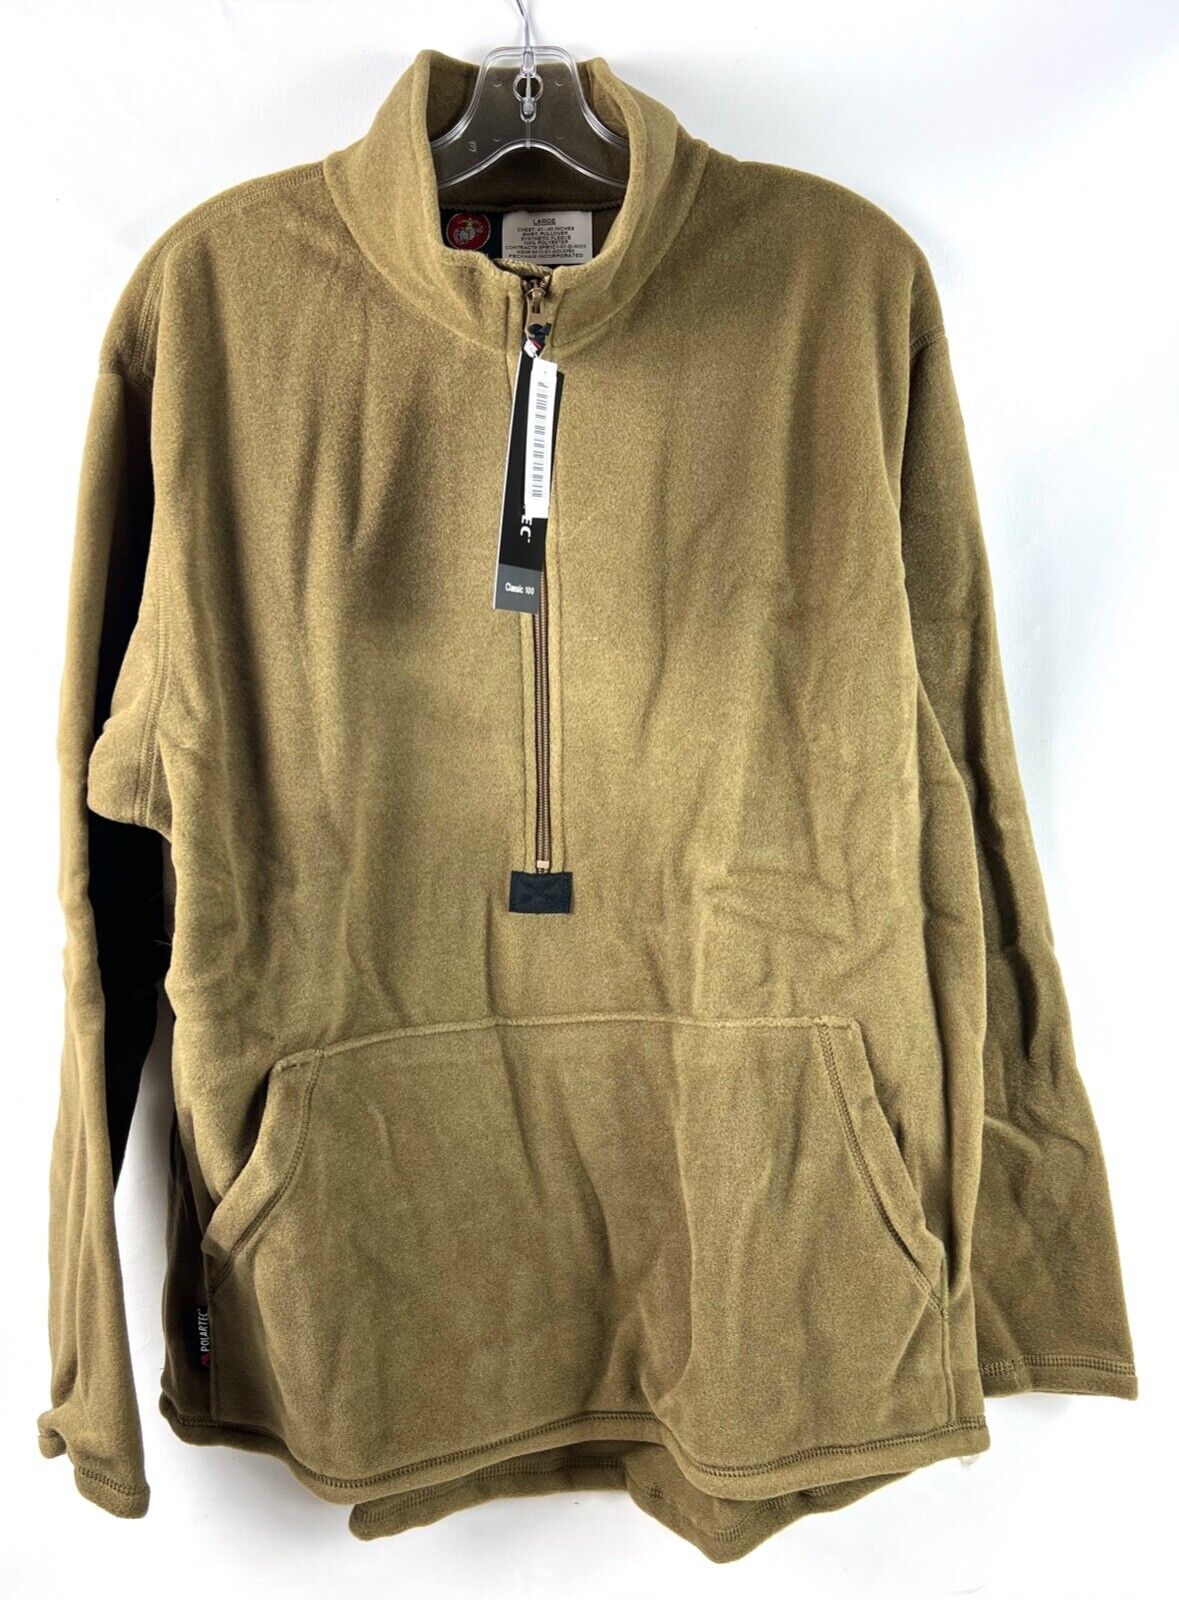 New USMC Peckham Polartec Fleece Pullover Jacket Shirt Coyote Brown Large